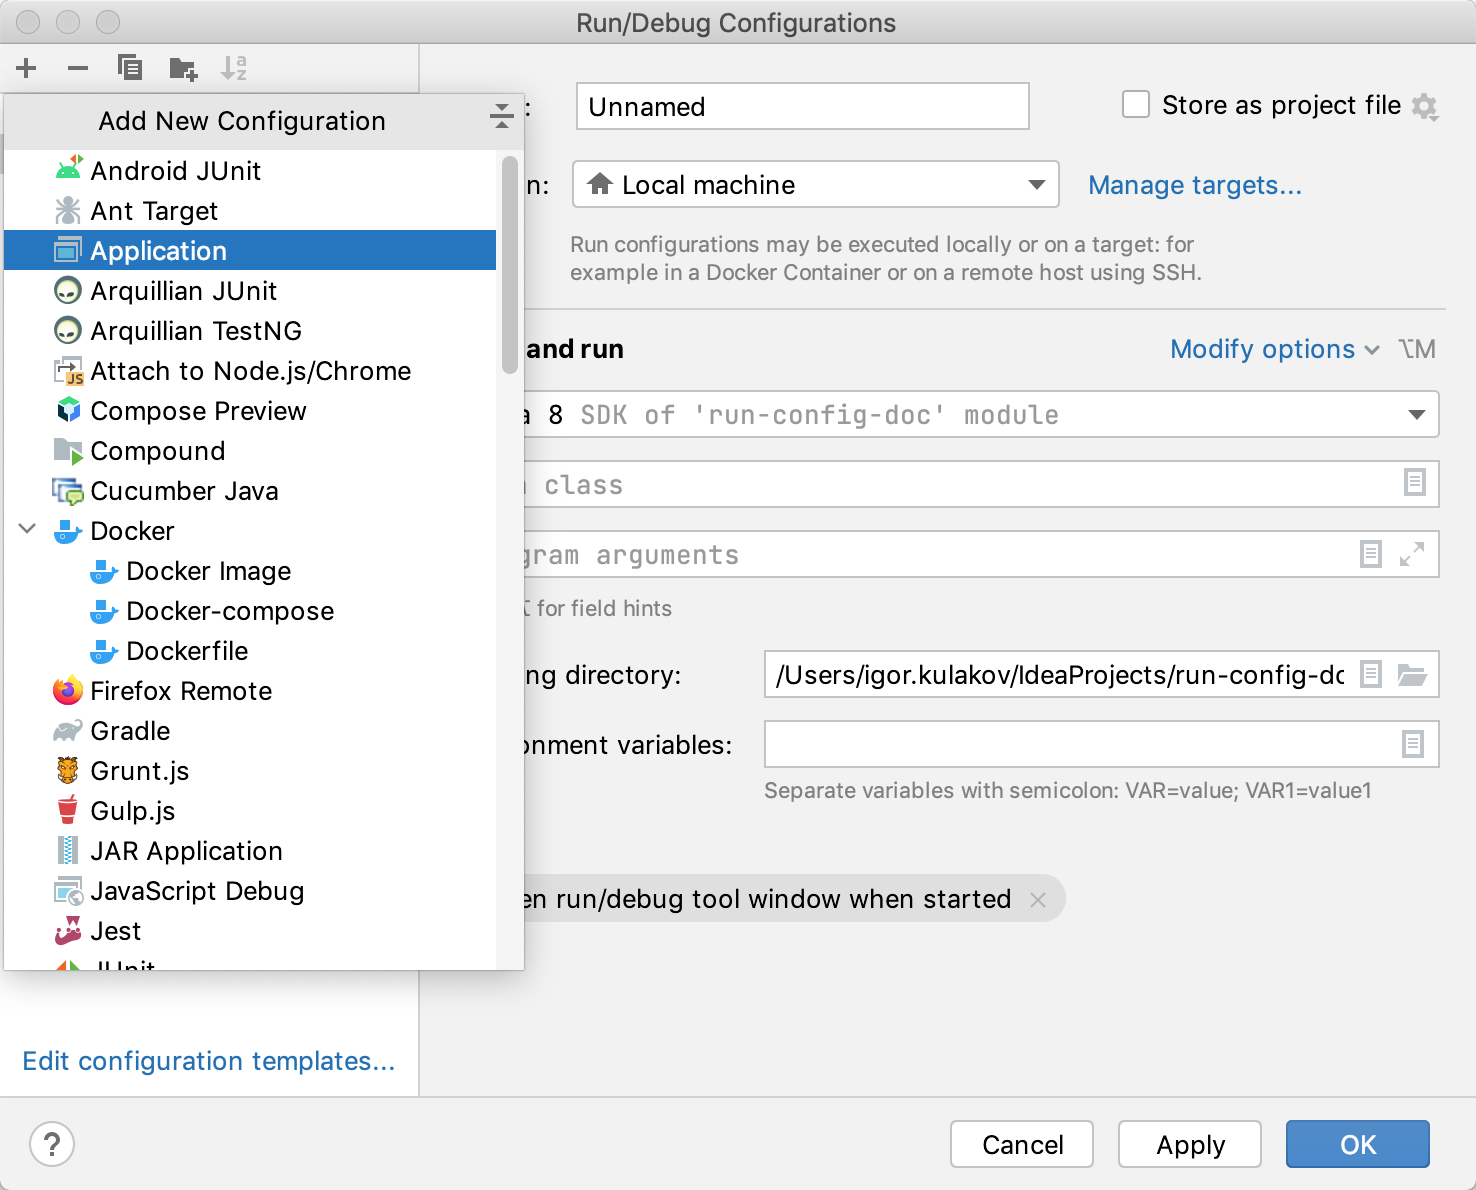 Selecting a new run/debug configuration template